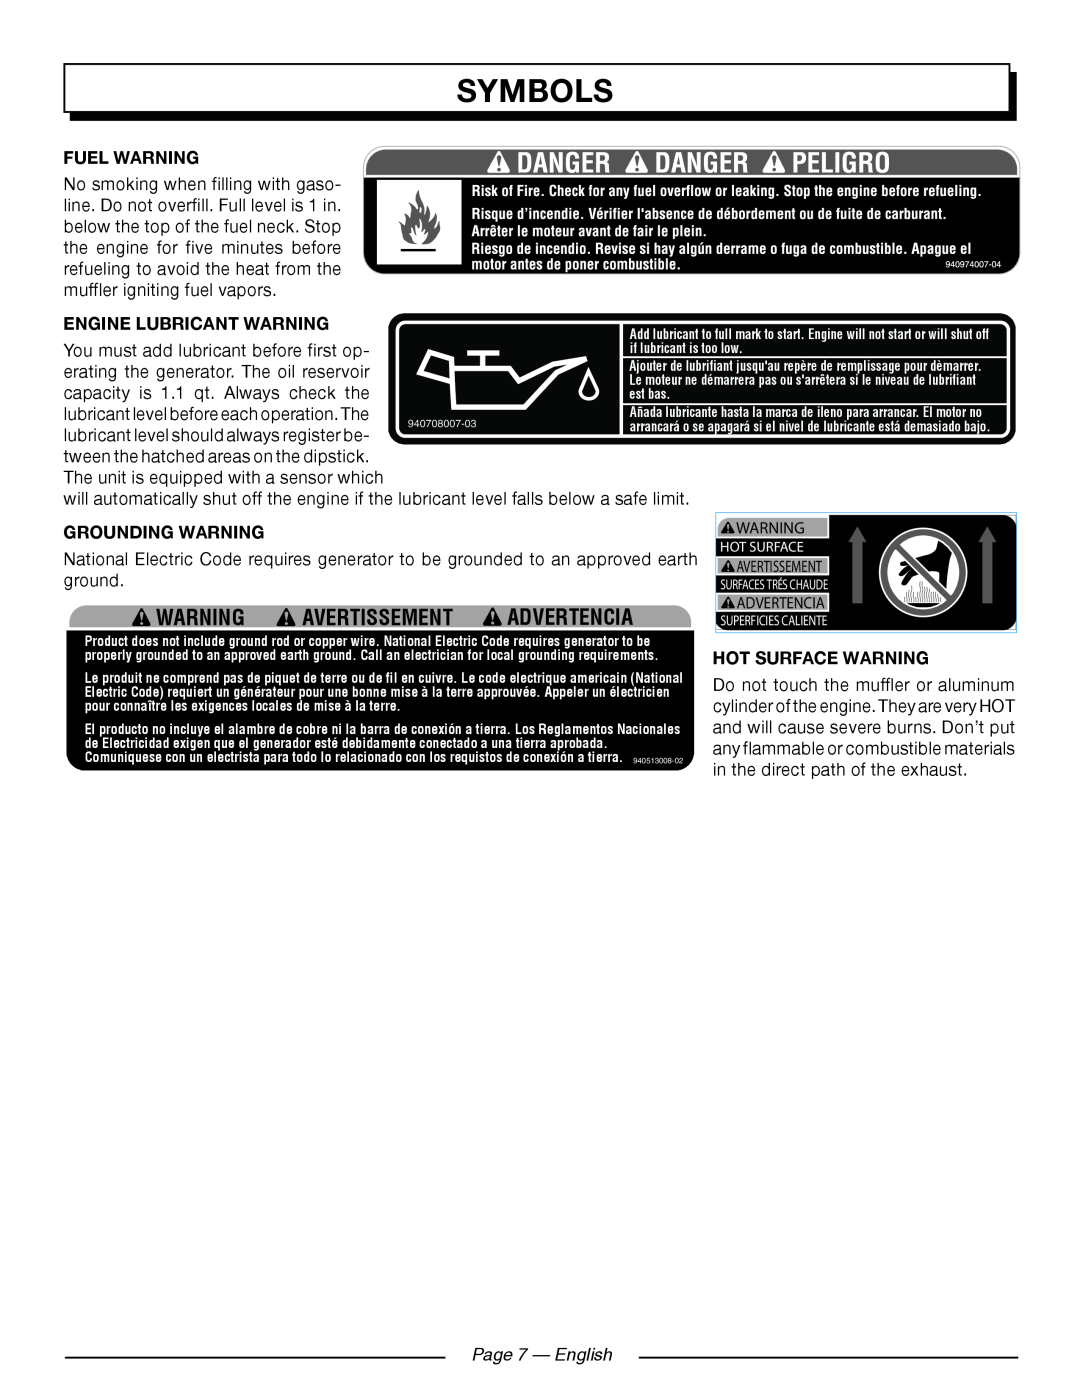 Homelite HGCA5700 Warning Avertissement Advertencia, Page 7 — English, Symbols, Fuel warning, engine LUBRICANT warning 